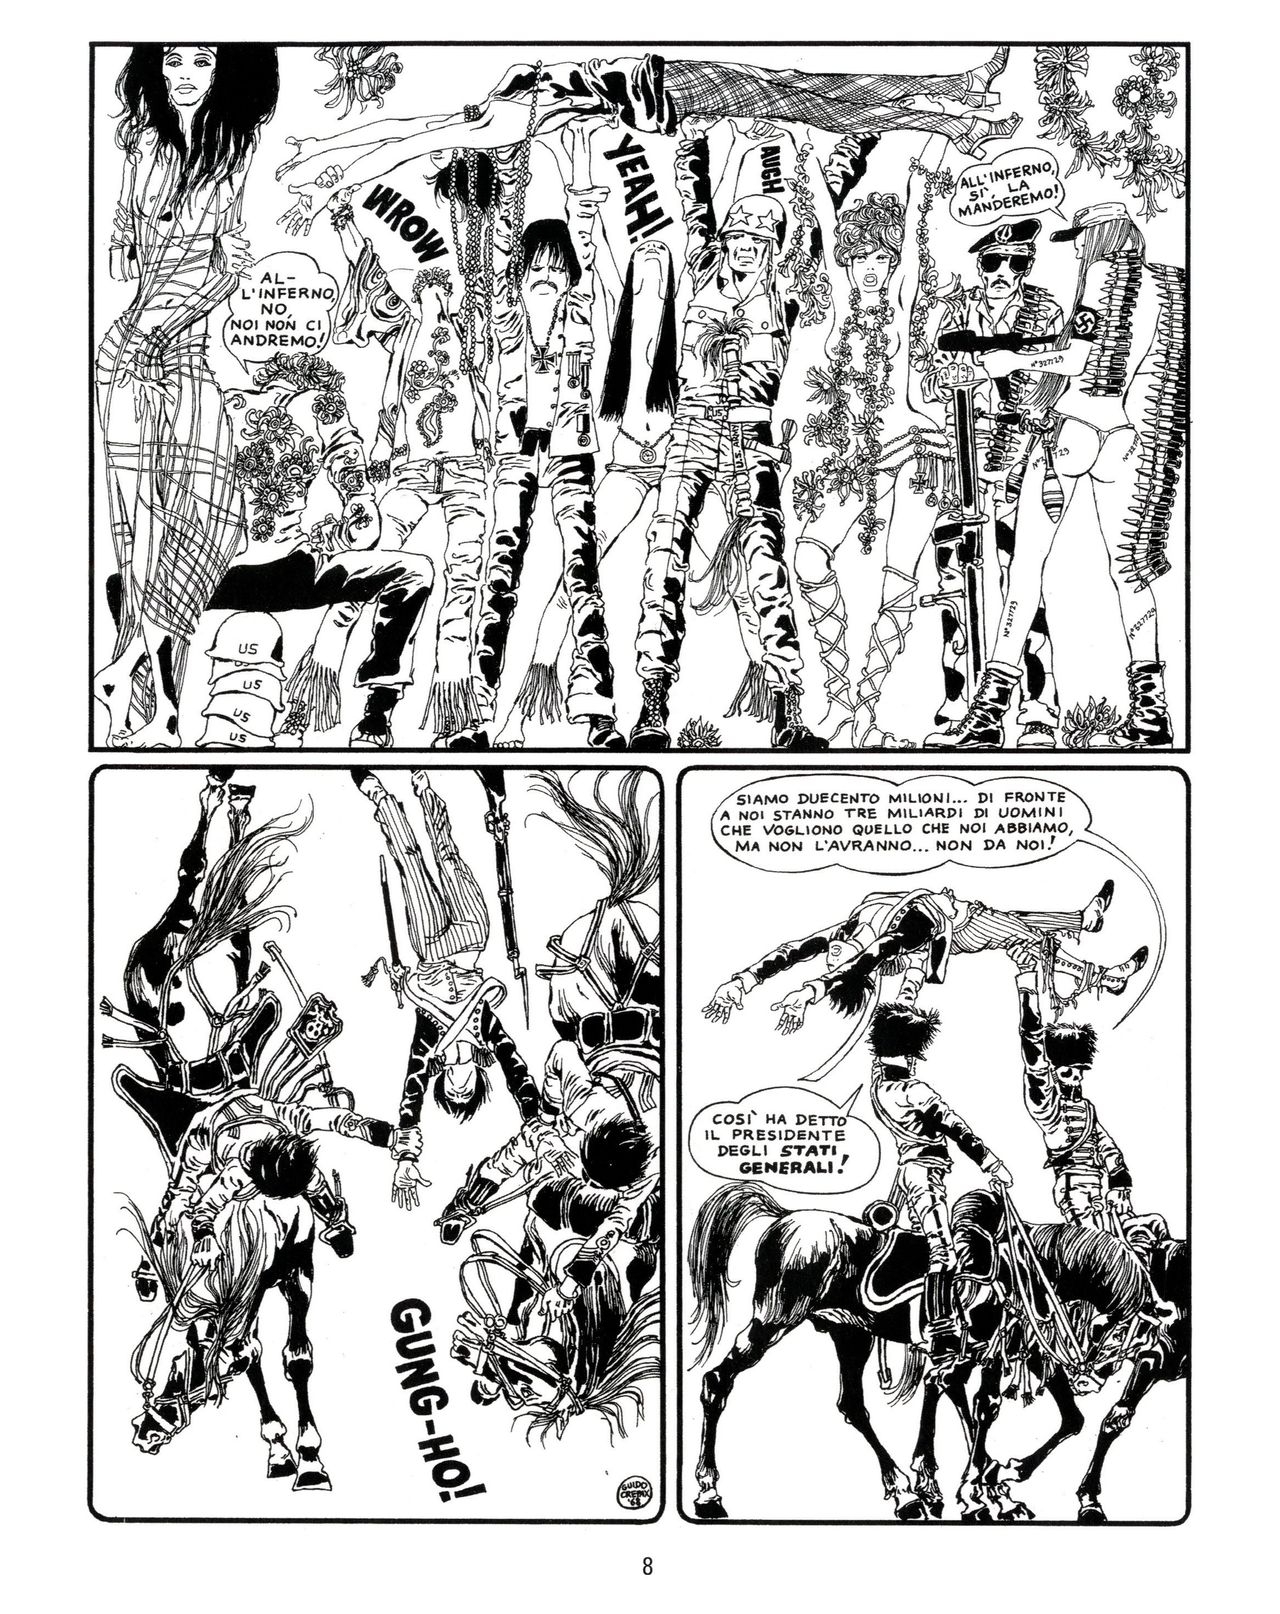 [Guido Crepax] Erotica Fumetti #25 : L'ascesa dei sotterranei : I cavalieri ciechi [Italian] 11